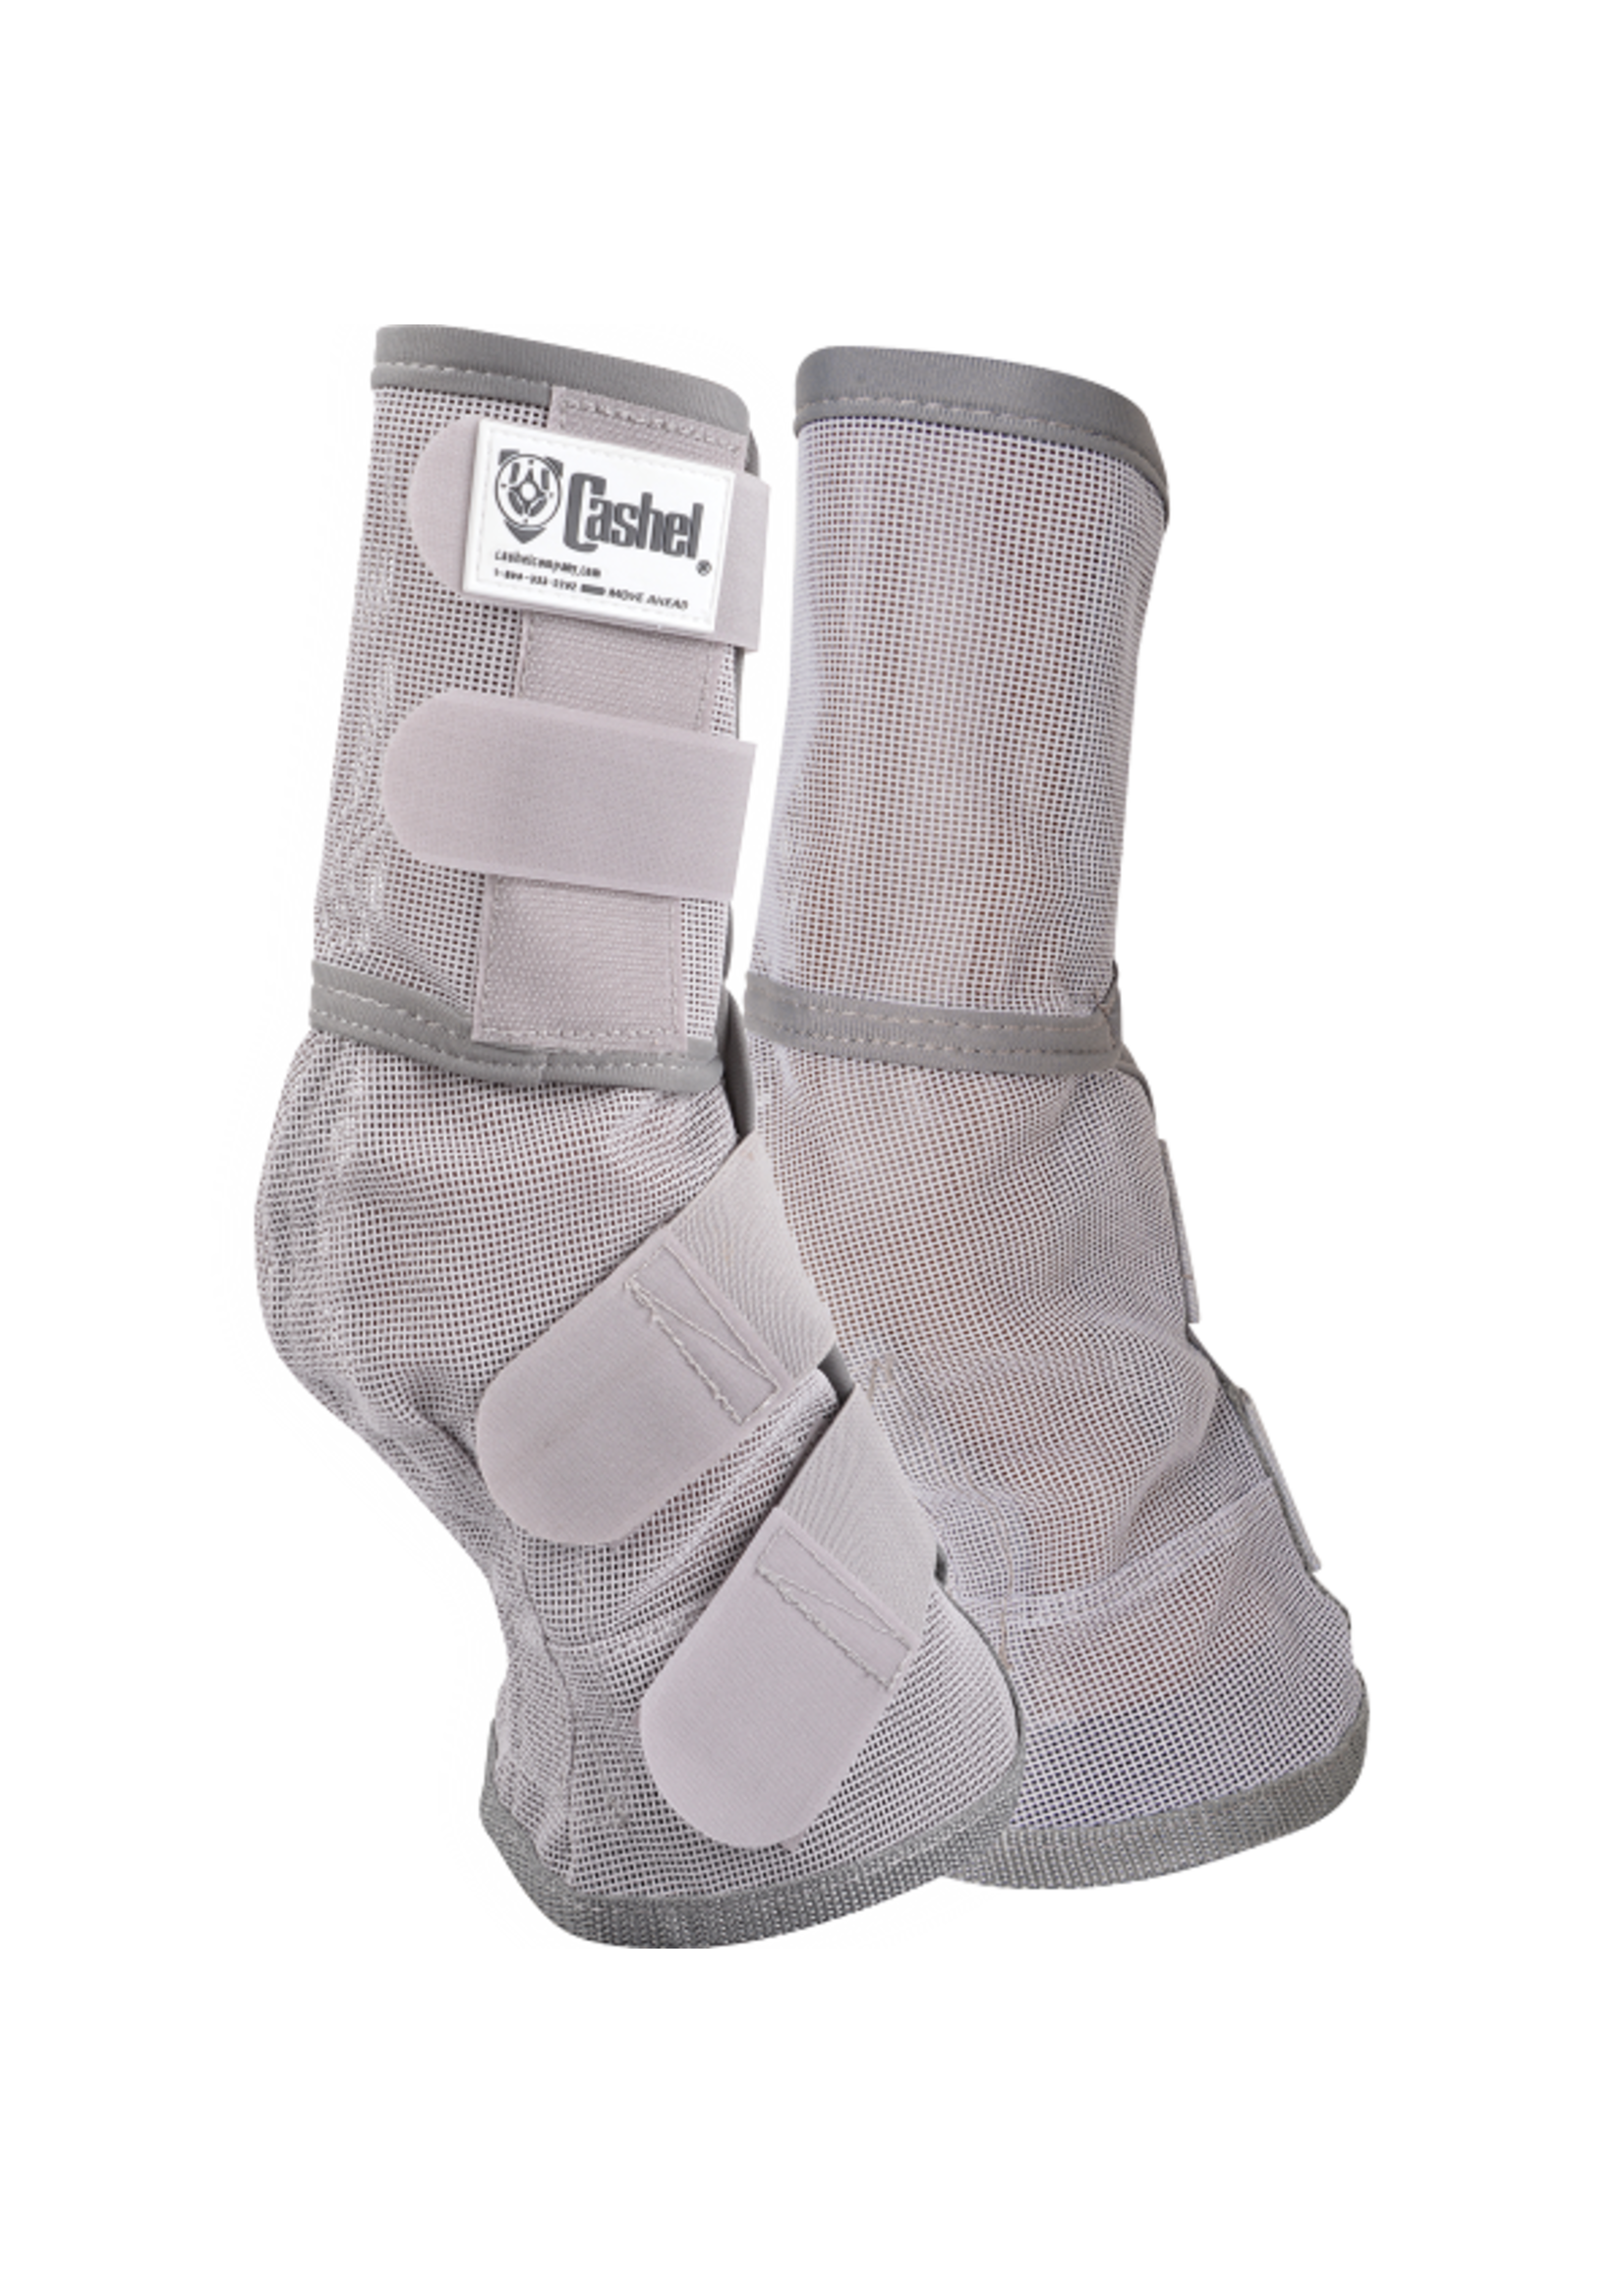 CASHEL Crusader Leg Guards - Fly Boots -